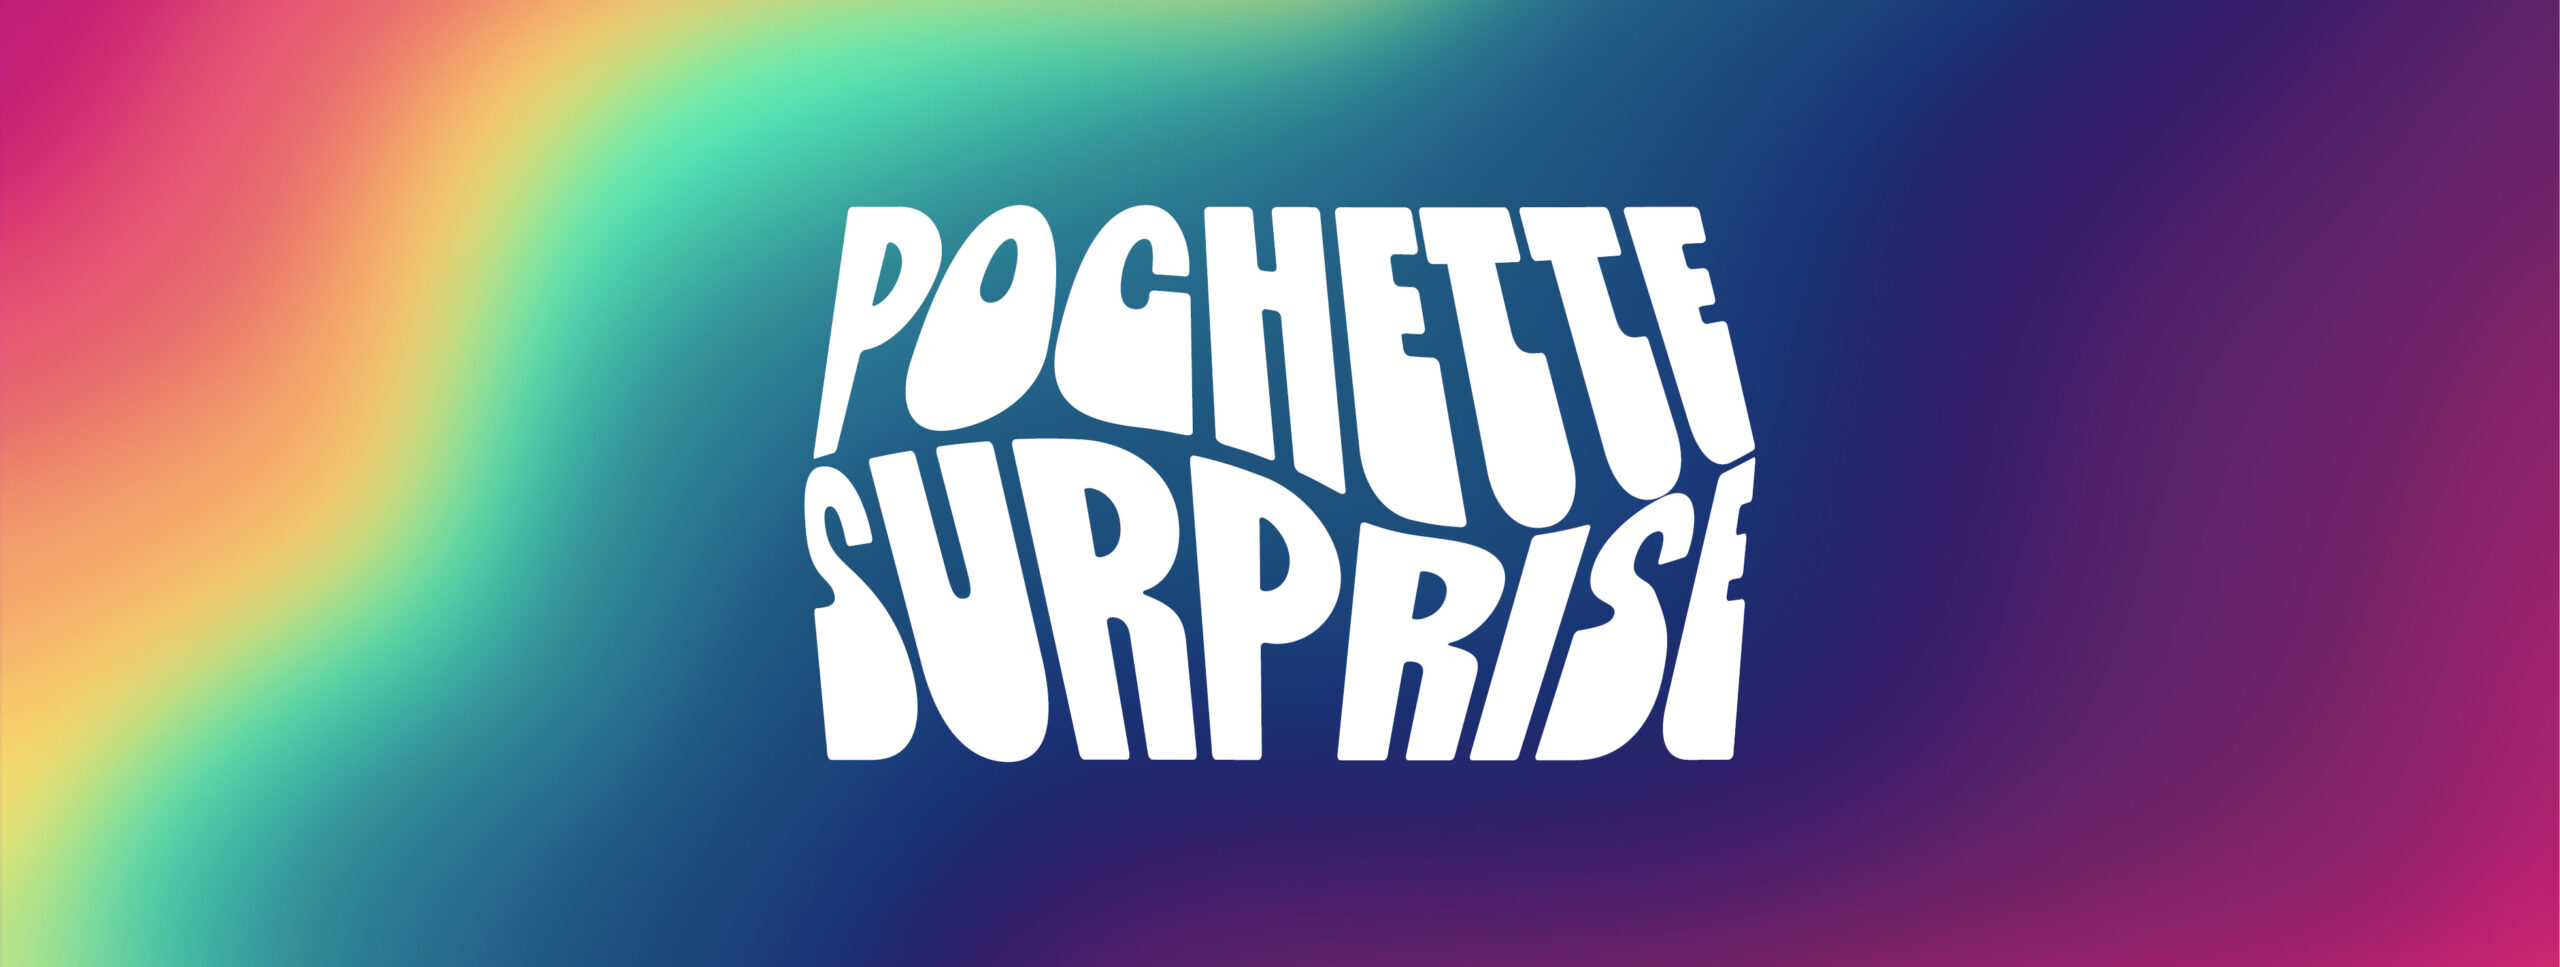 Pochette Surprise #4